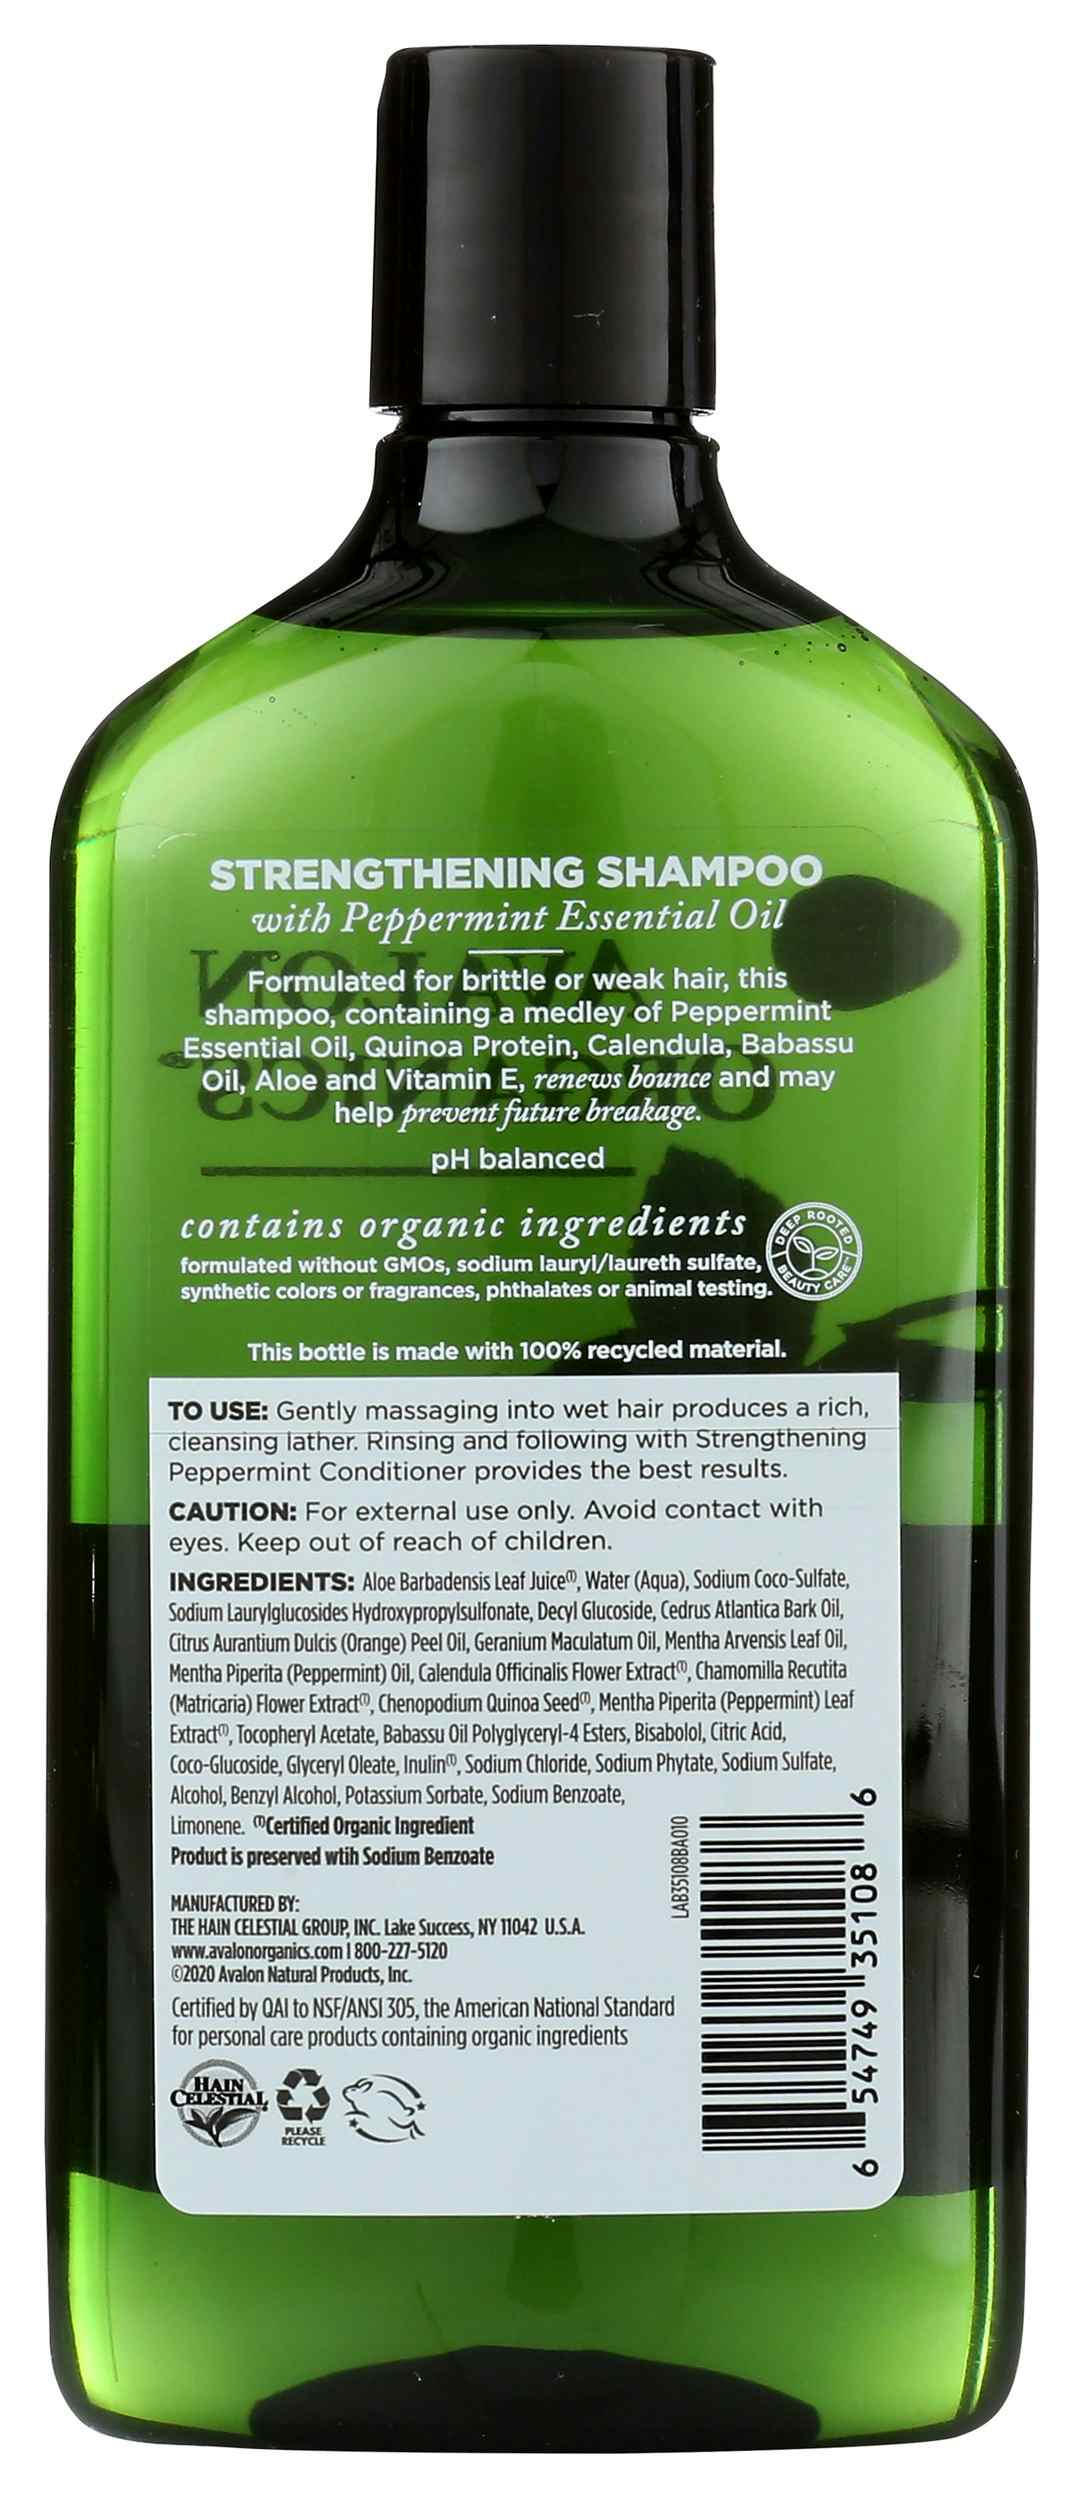 Avalon Organics Strengthening Peppermint Shampoo